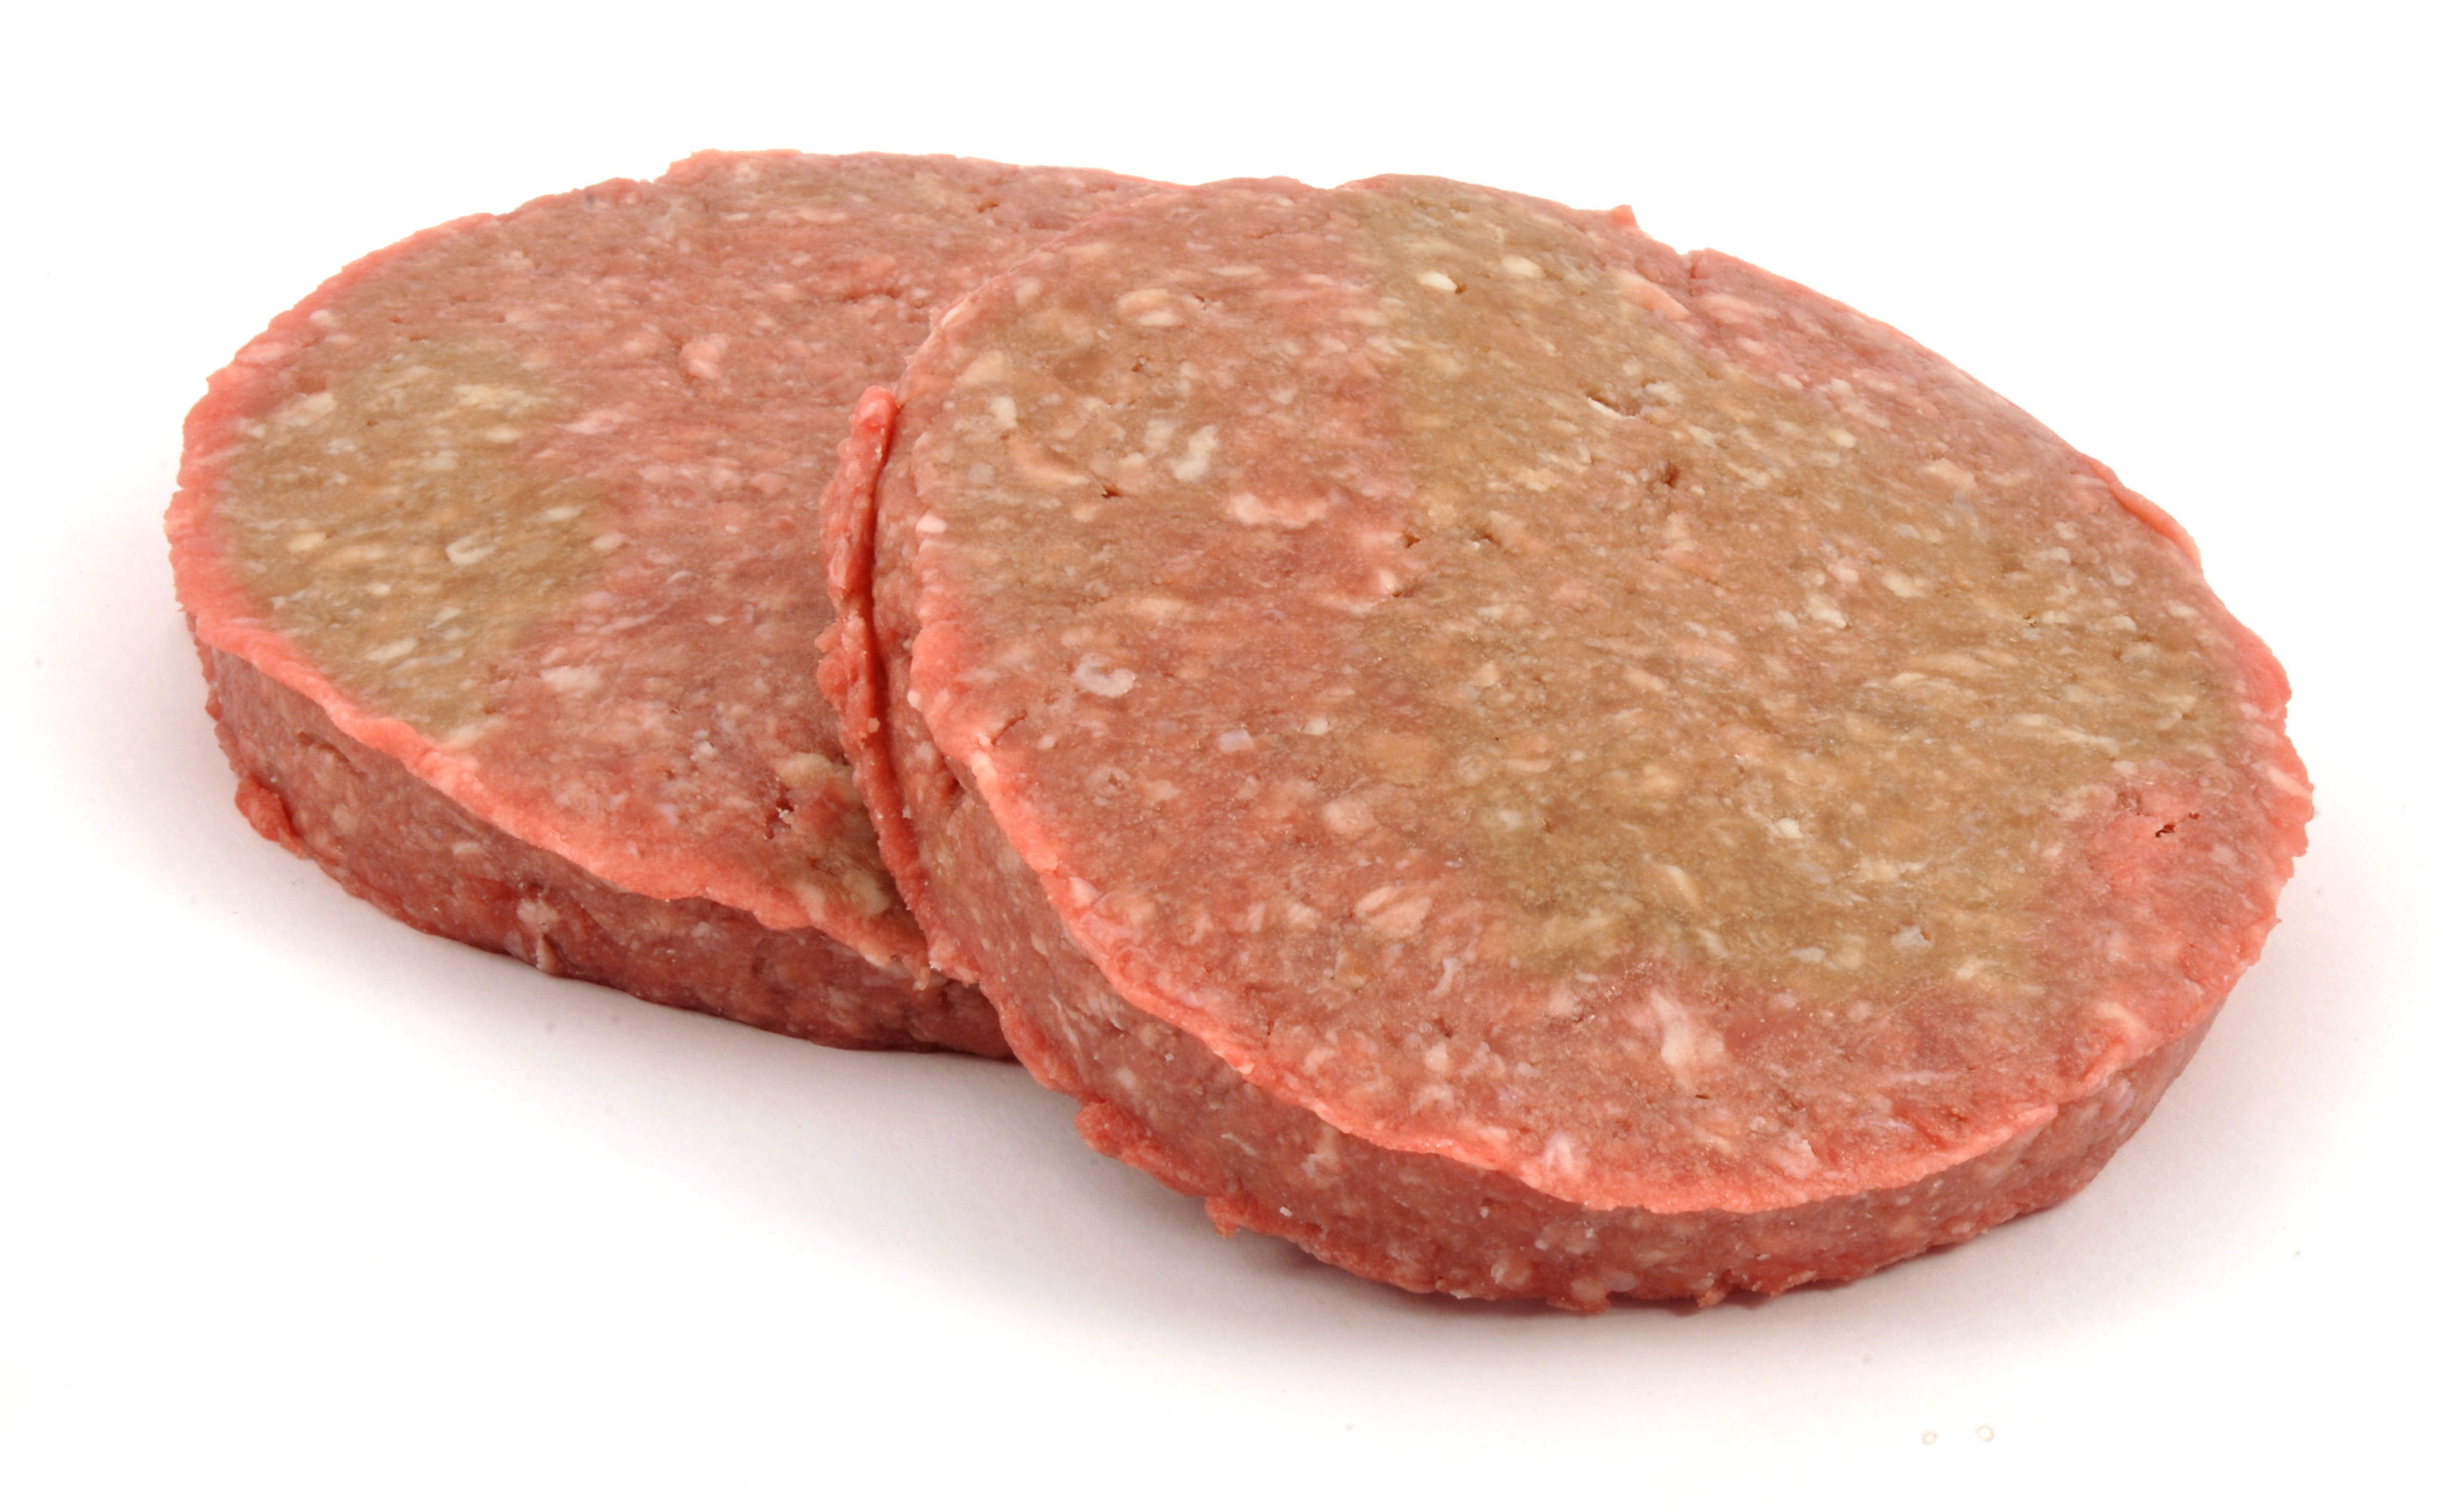 File:Pre-formed hamburger.JPG - Wikimedia Commons